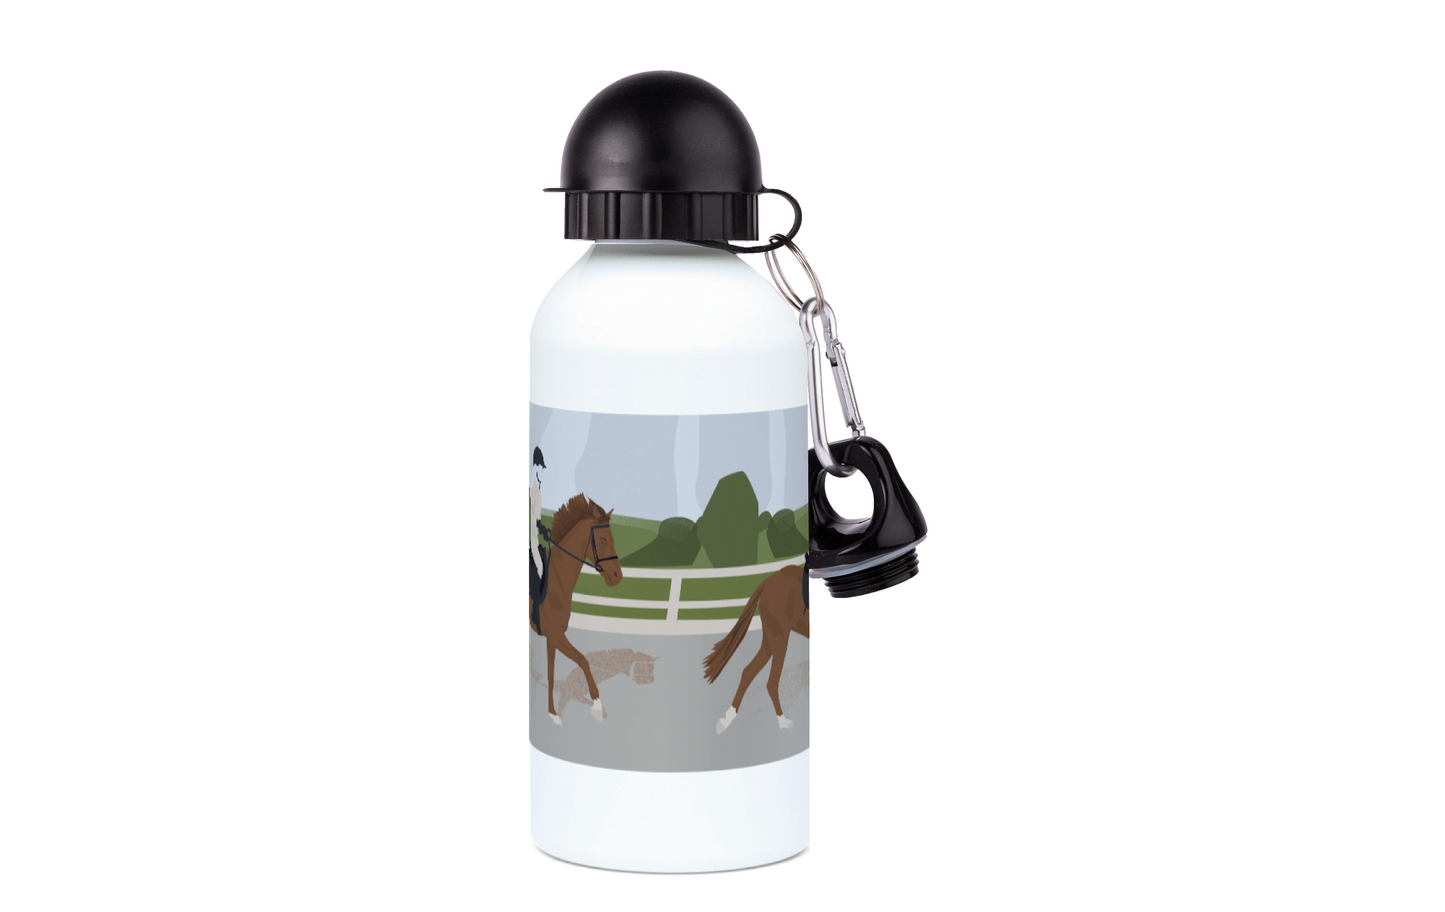 Aluminum horse riding bottle "On the horse" - Customizable